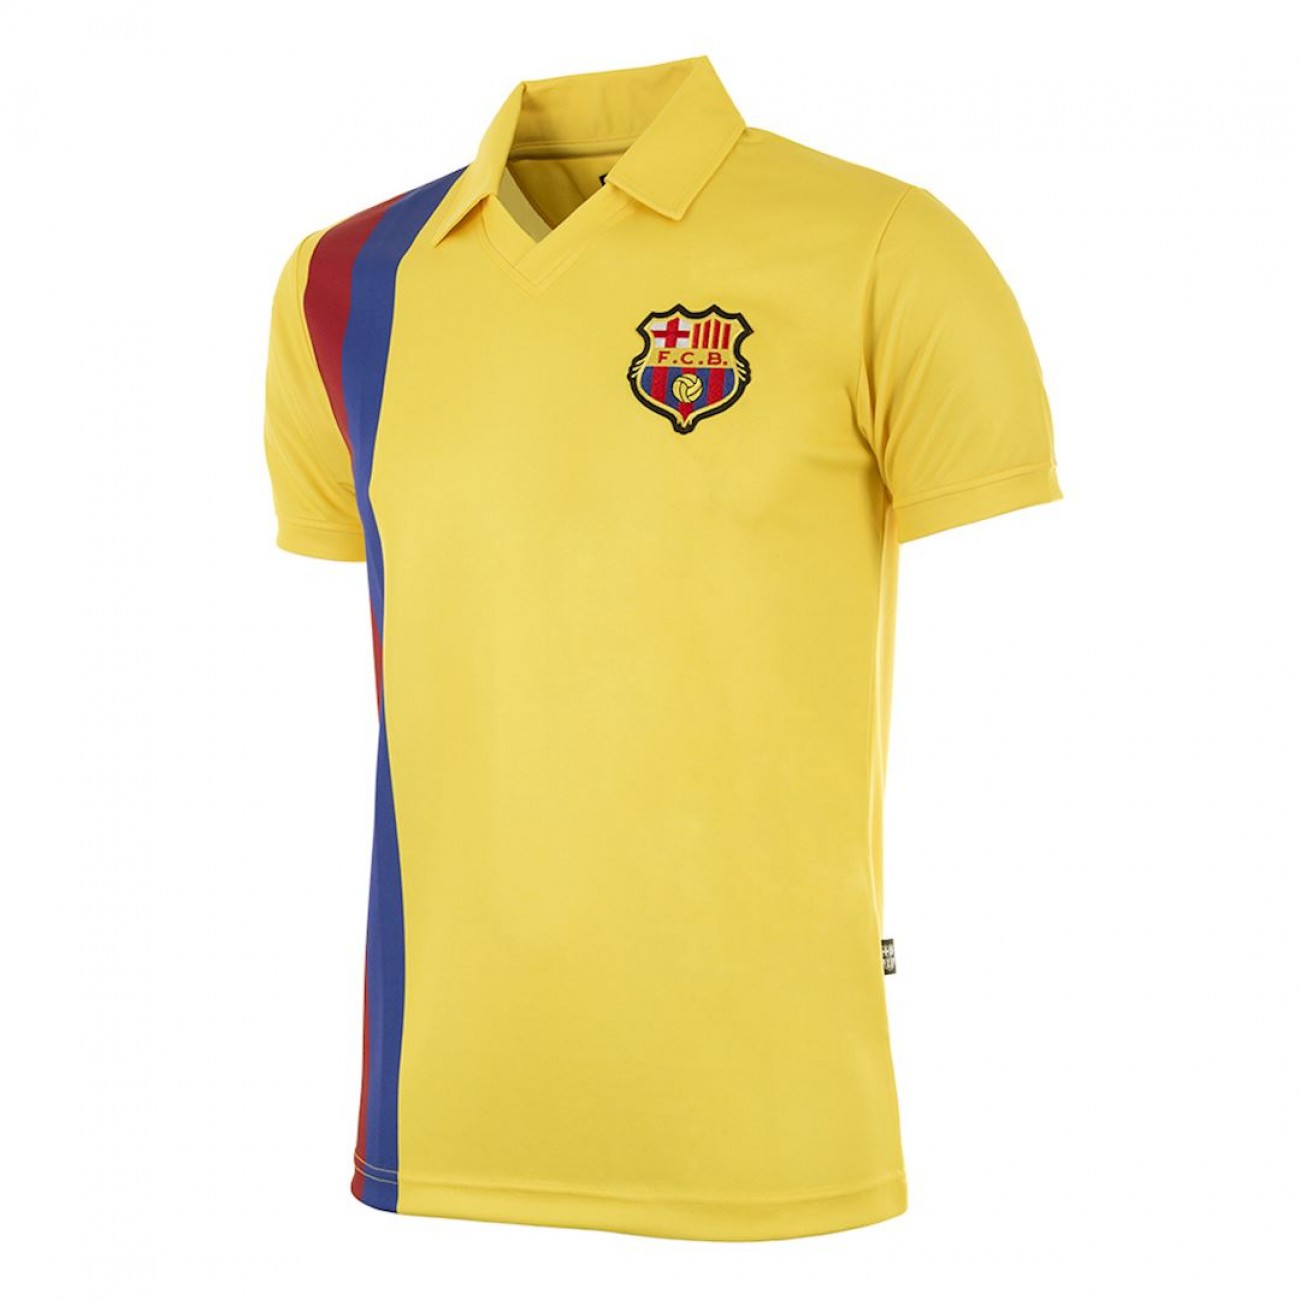 camiseta clasica barcelona